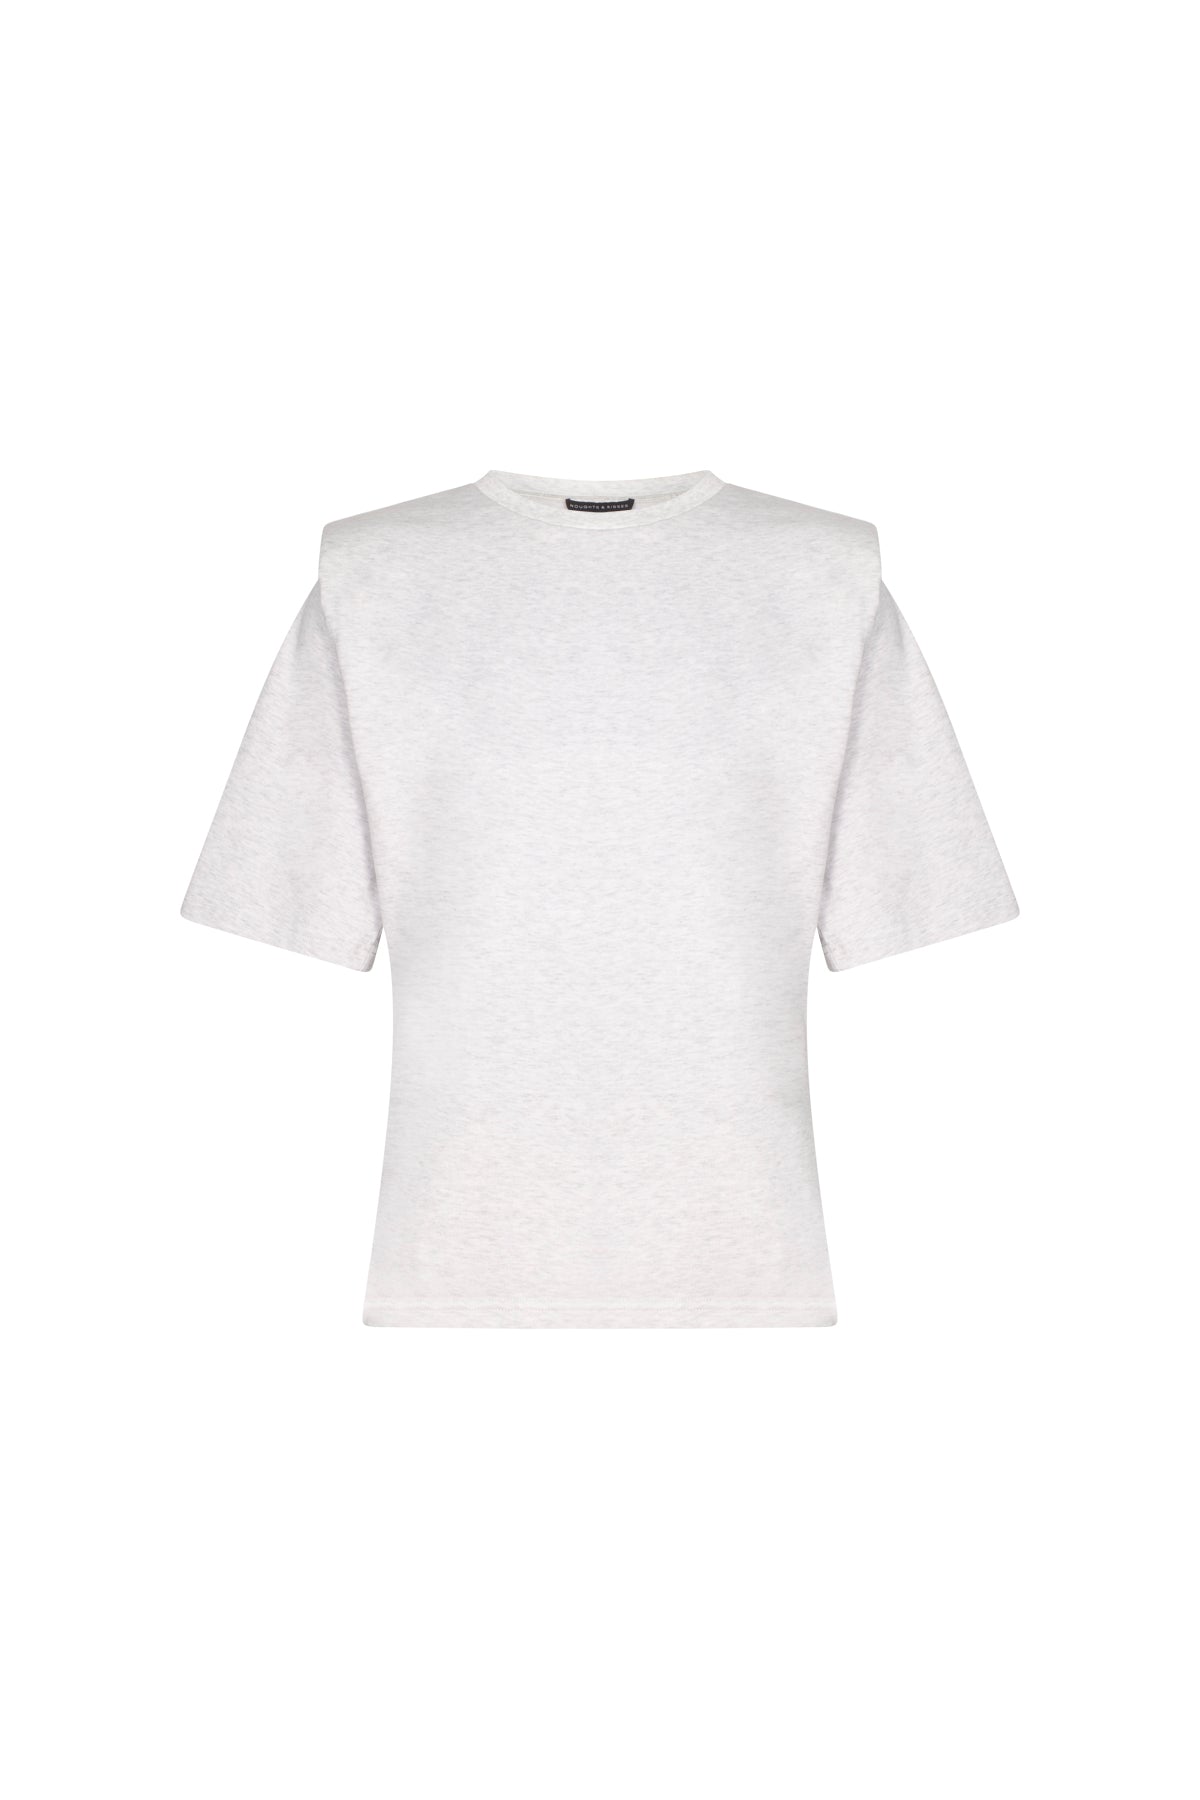 GISELE Grey Marl Shoulder Pad T-Shirt